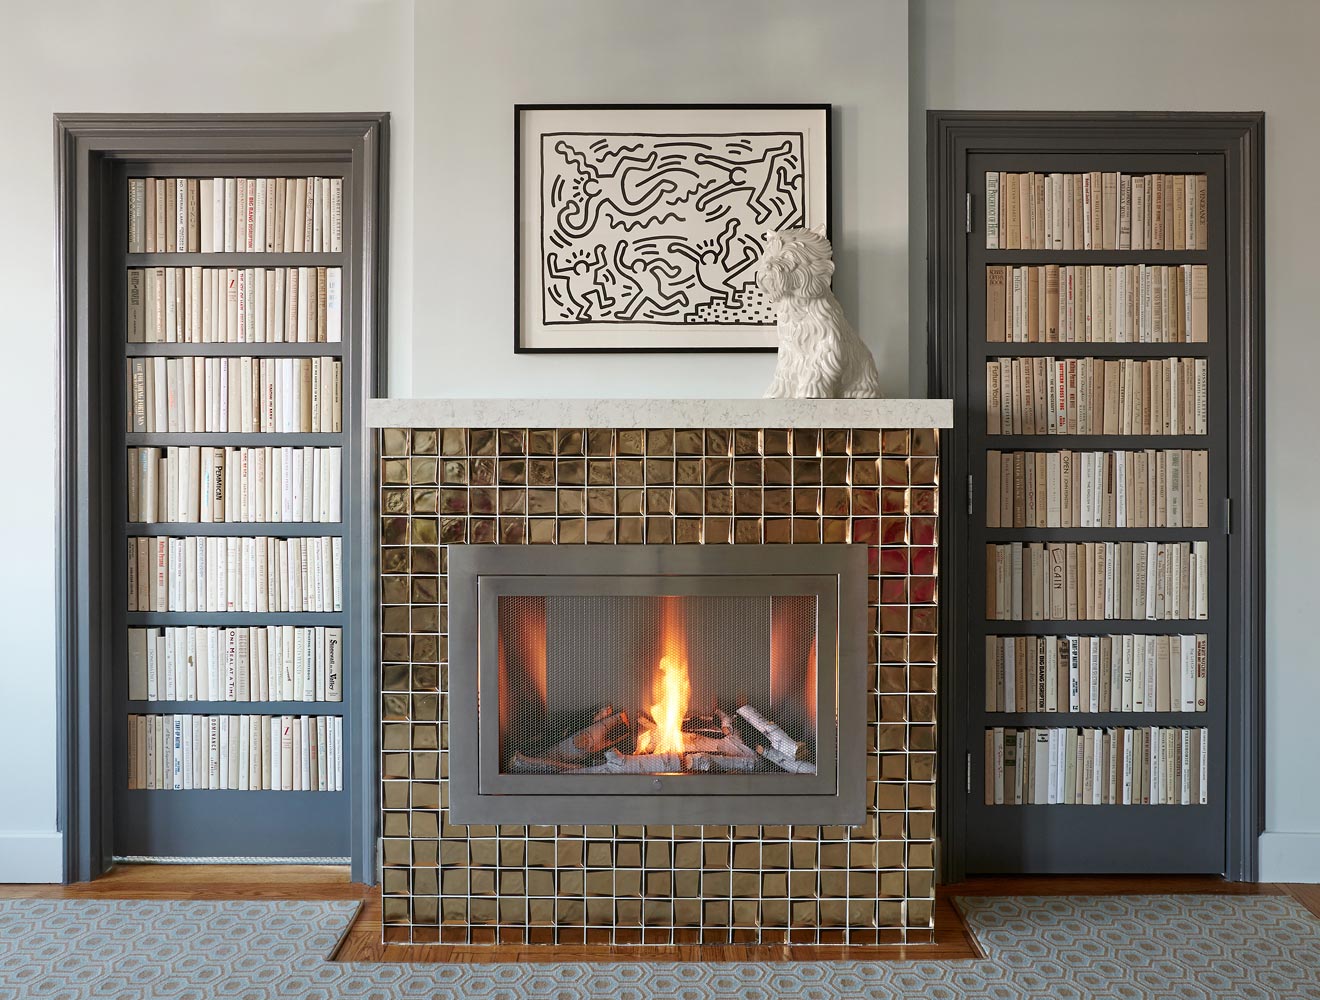 Bookcase design in a Greenwich Village apartment by Annette Jaffe Interiors